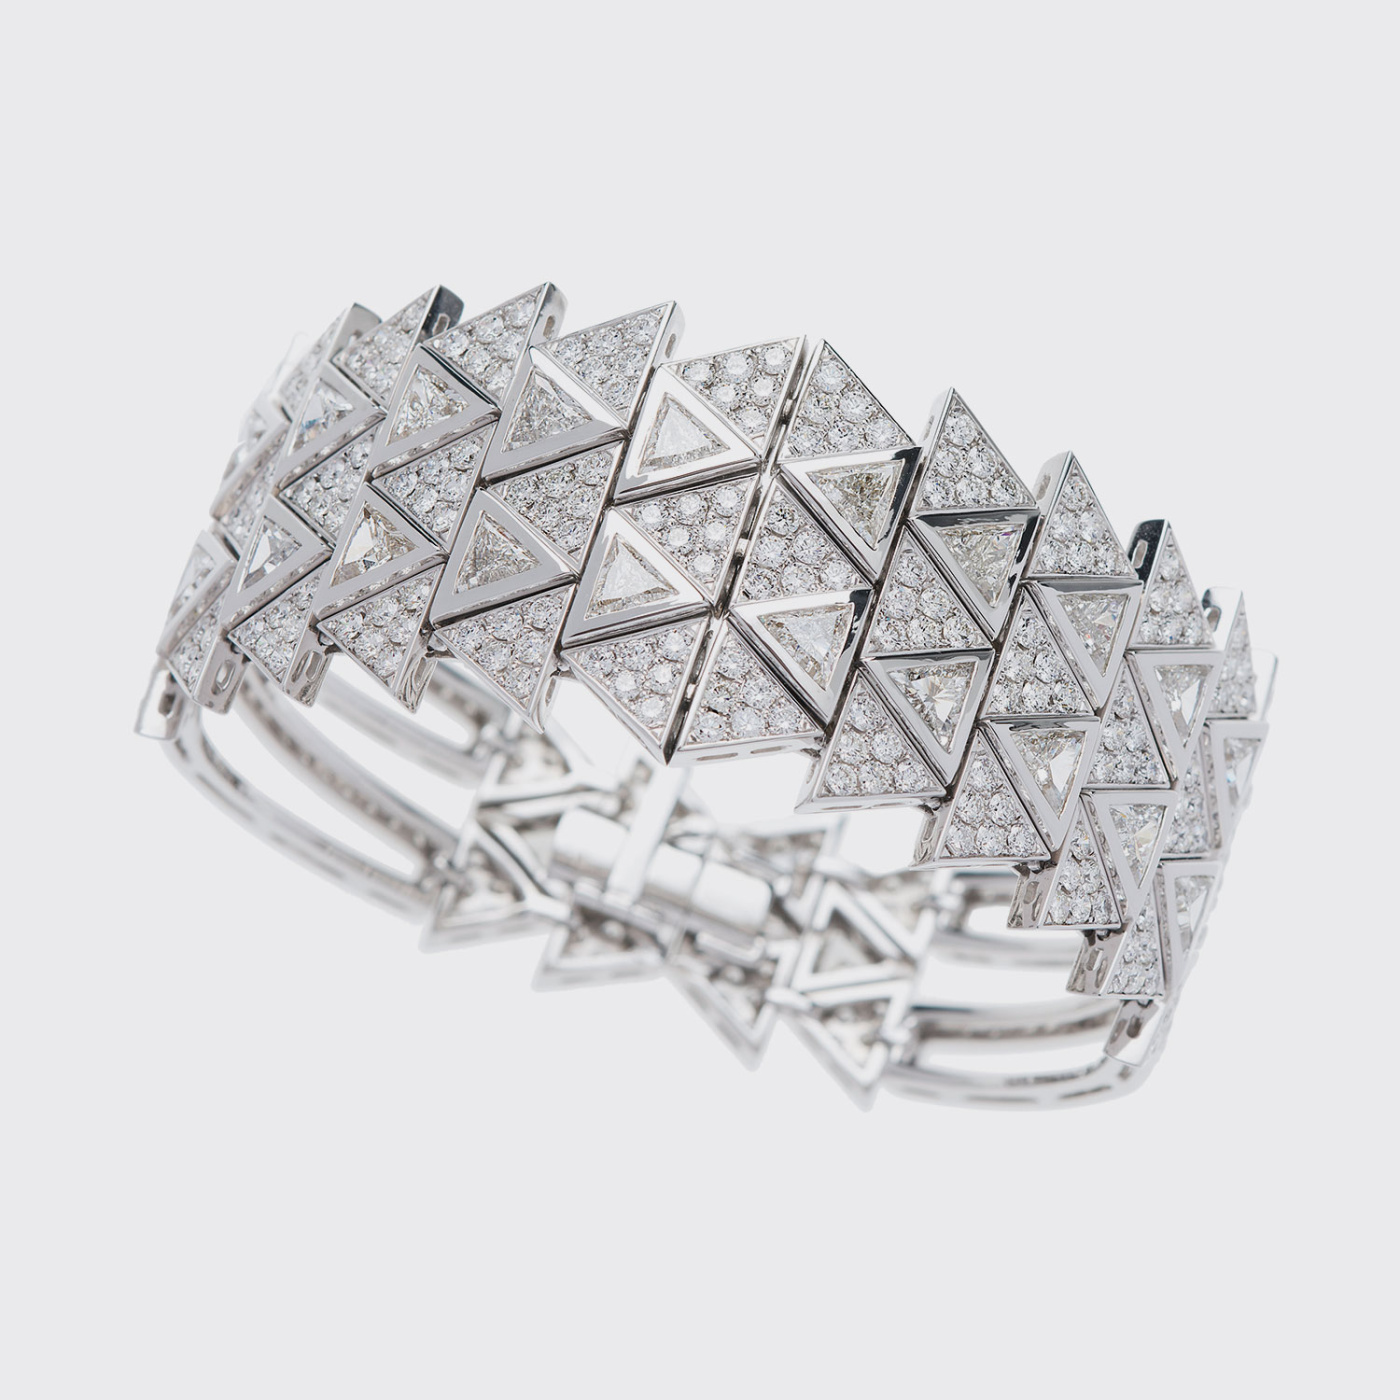 White gold cuff bracelet with white trillion diamonds